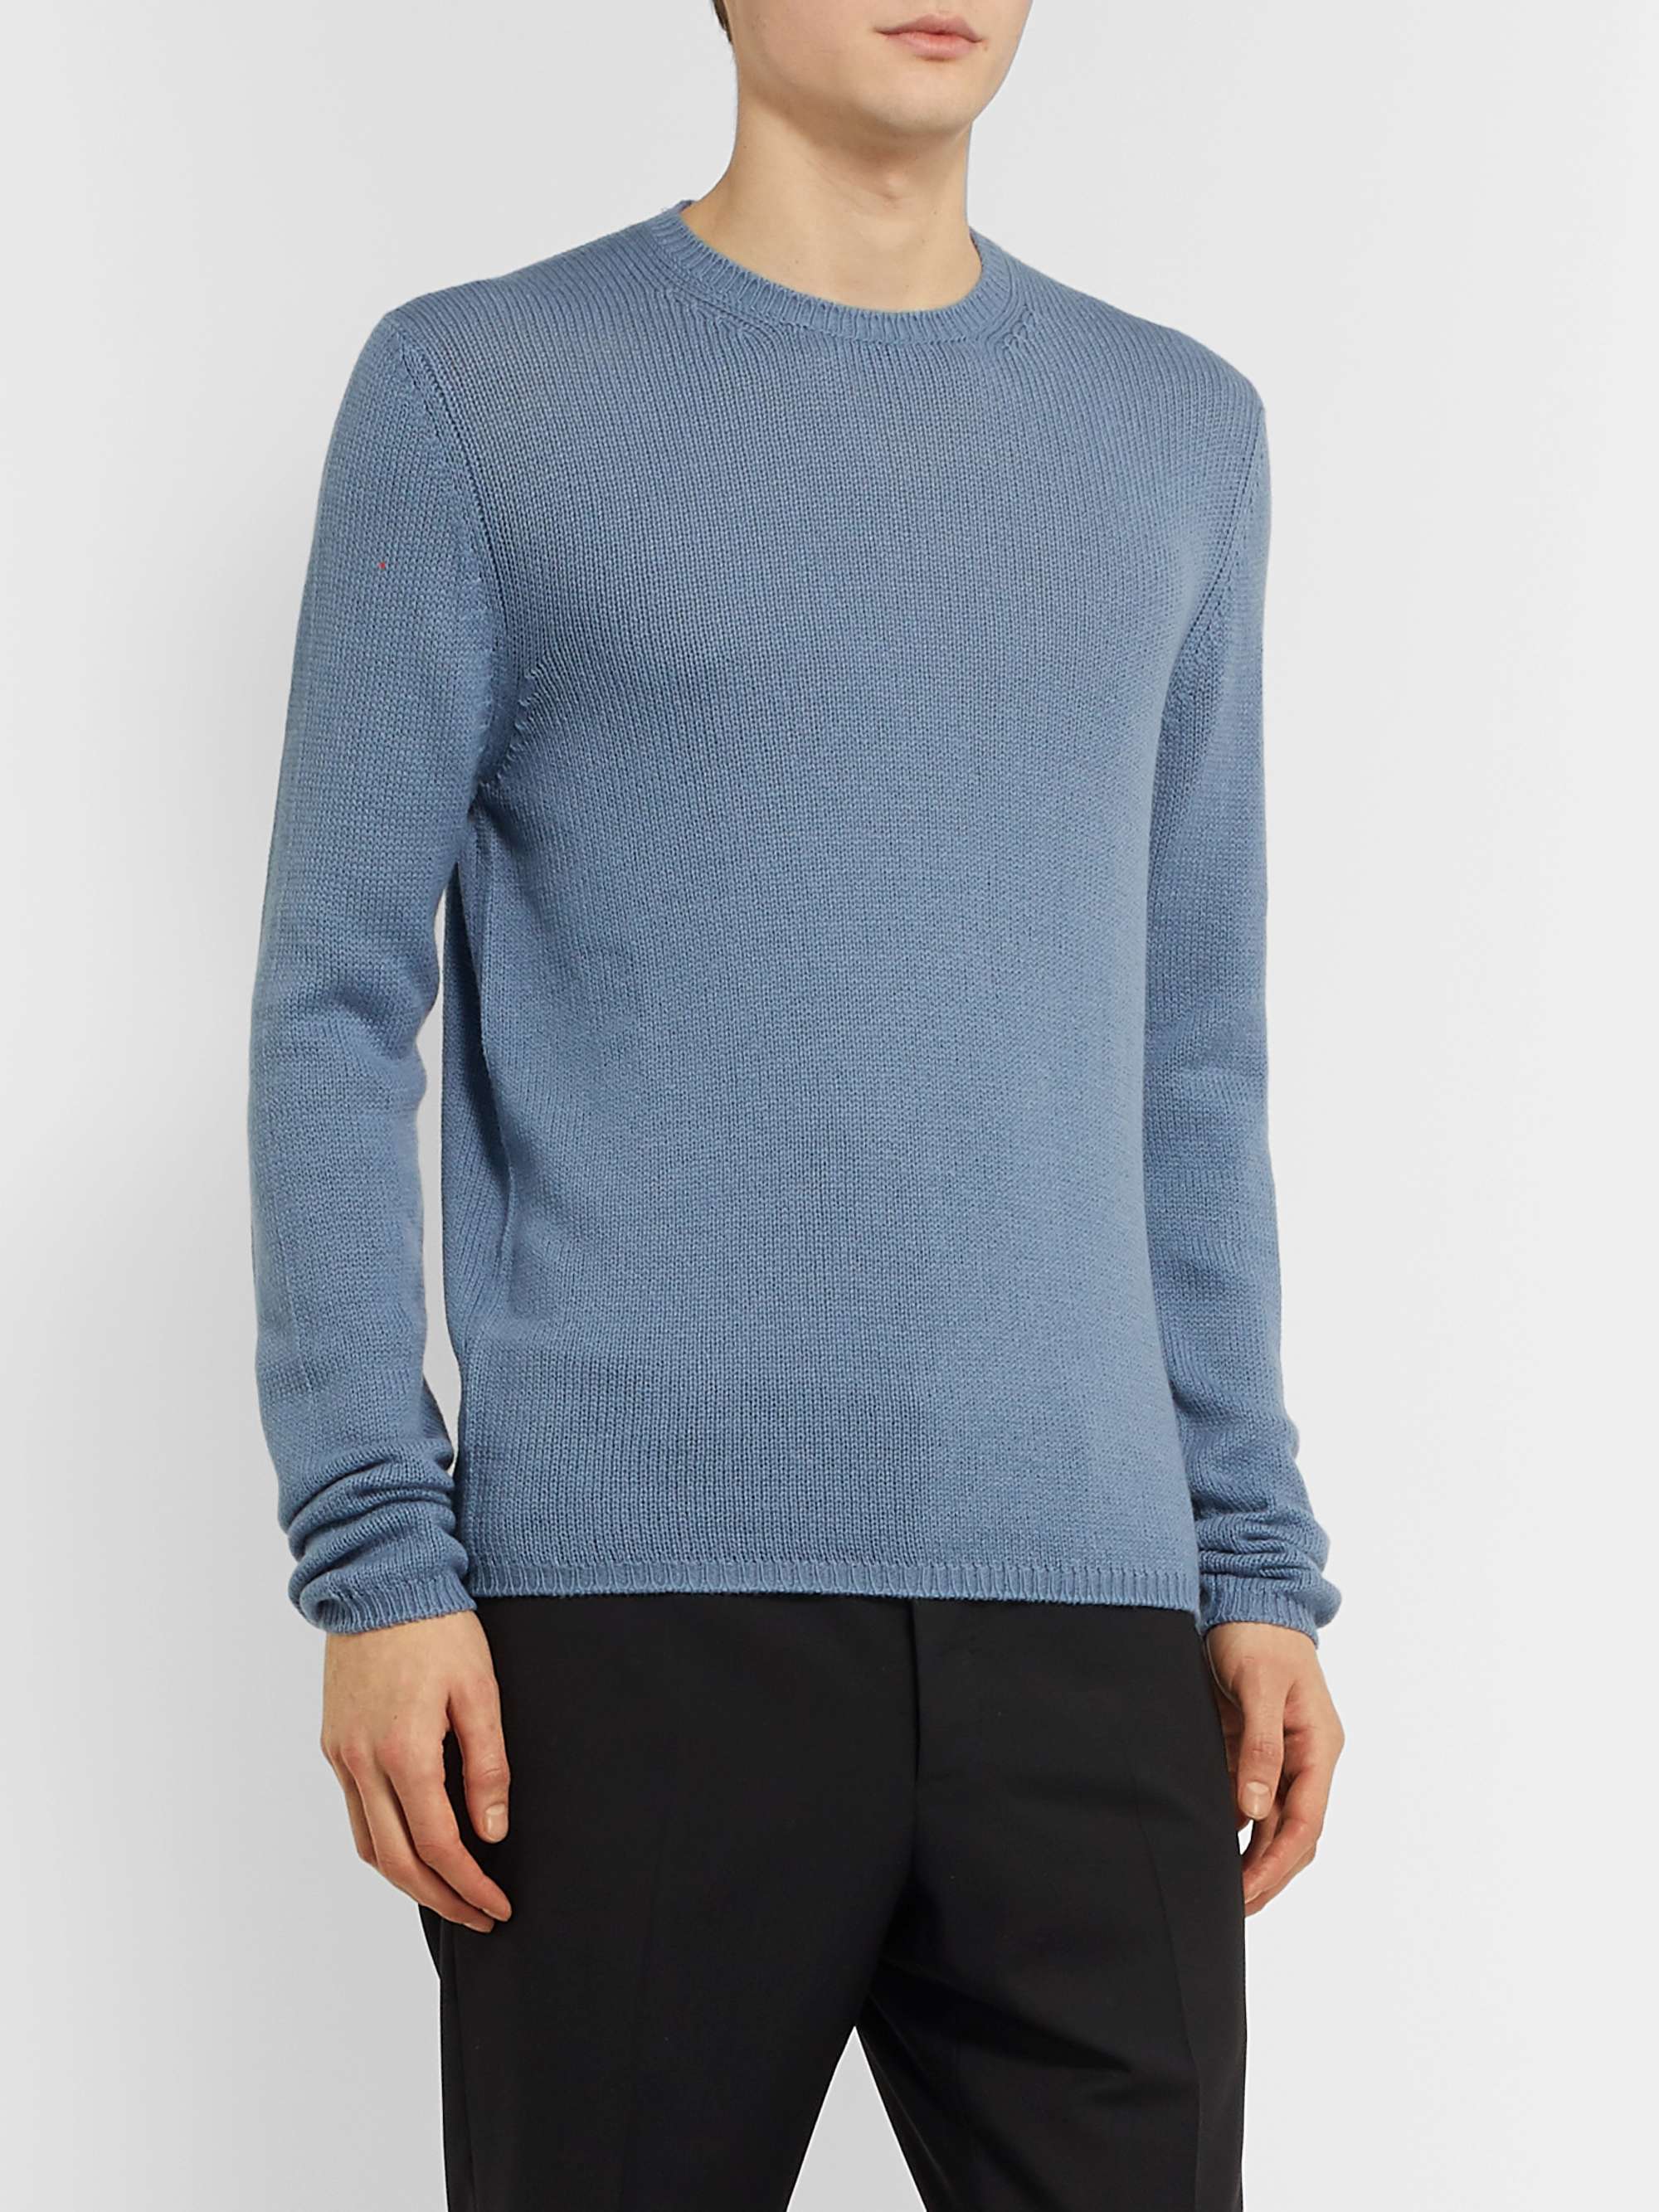 PRADA Slim-Fit Cashmere Sweater